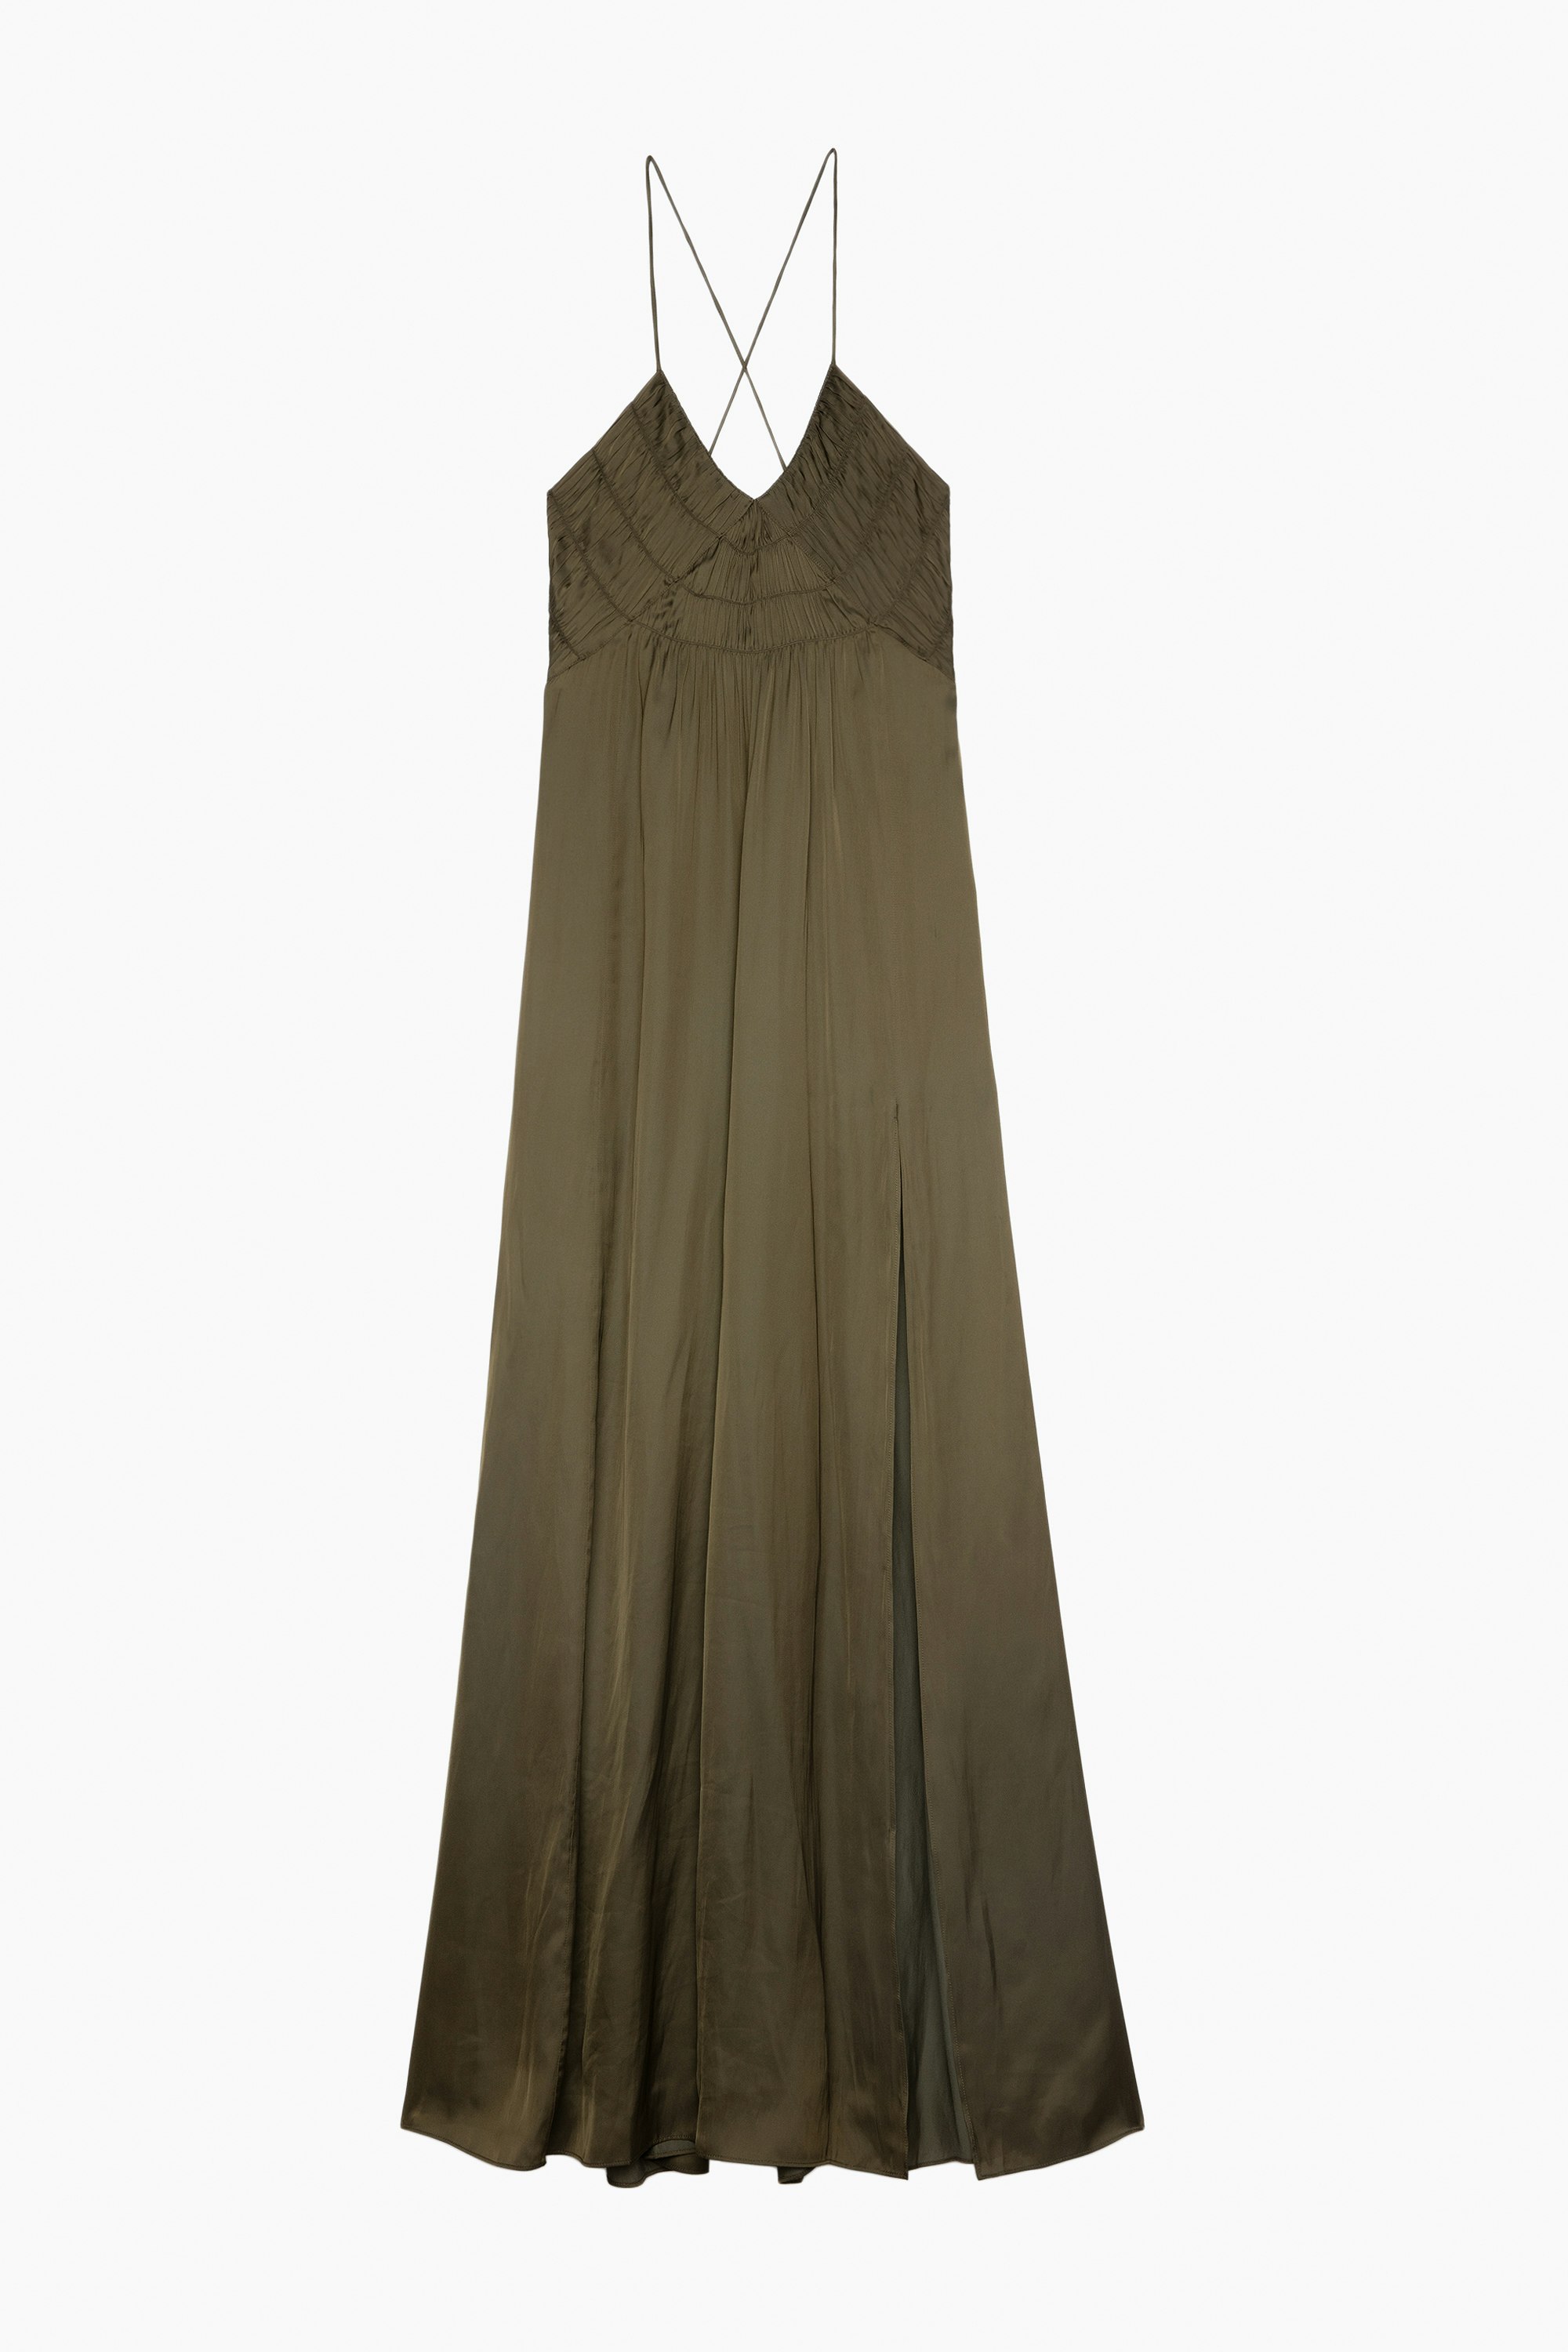 Rayonne Satin Dress - Women's long dress in gathered khaki satin with thin straps